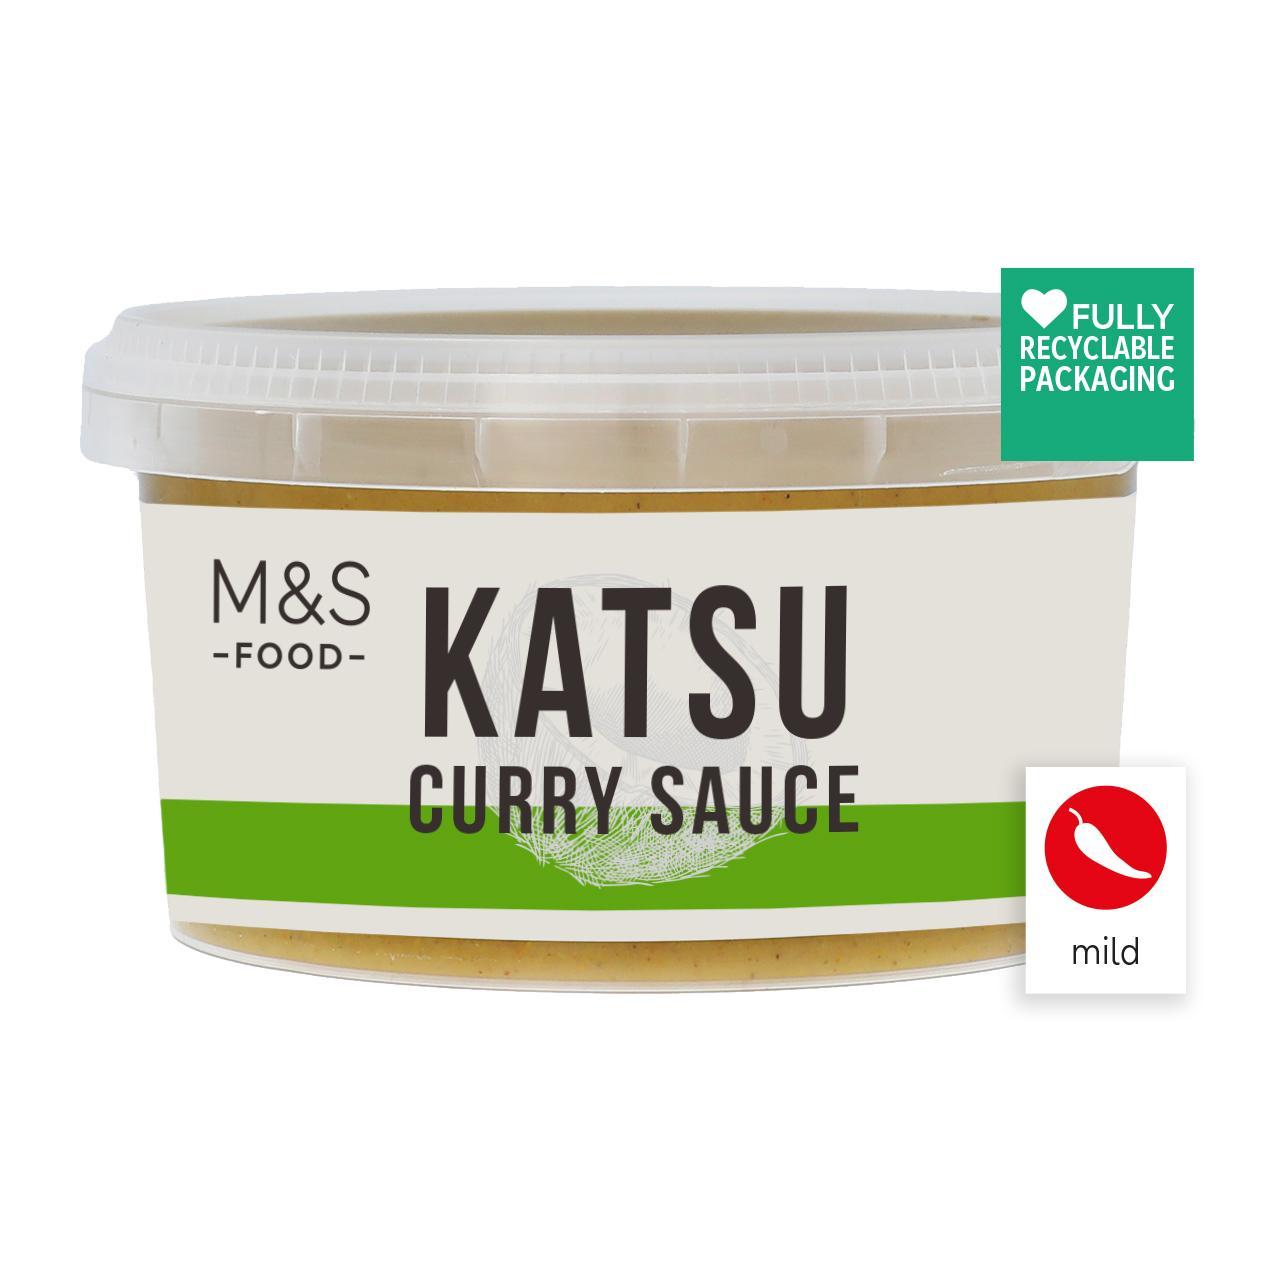 M&S Katsu Curry Sauce